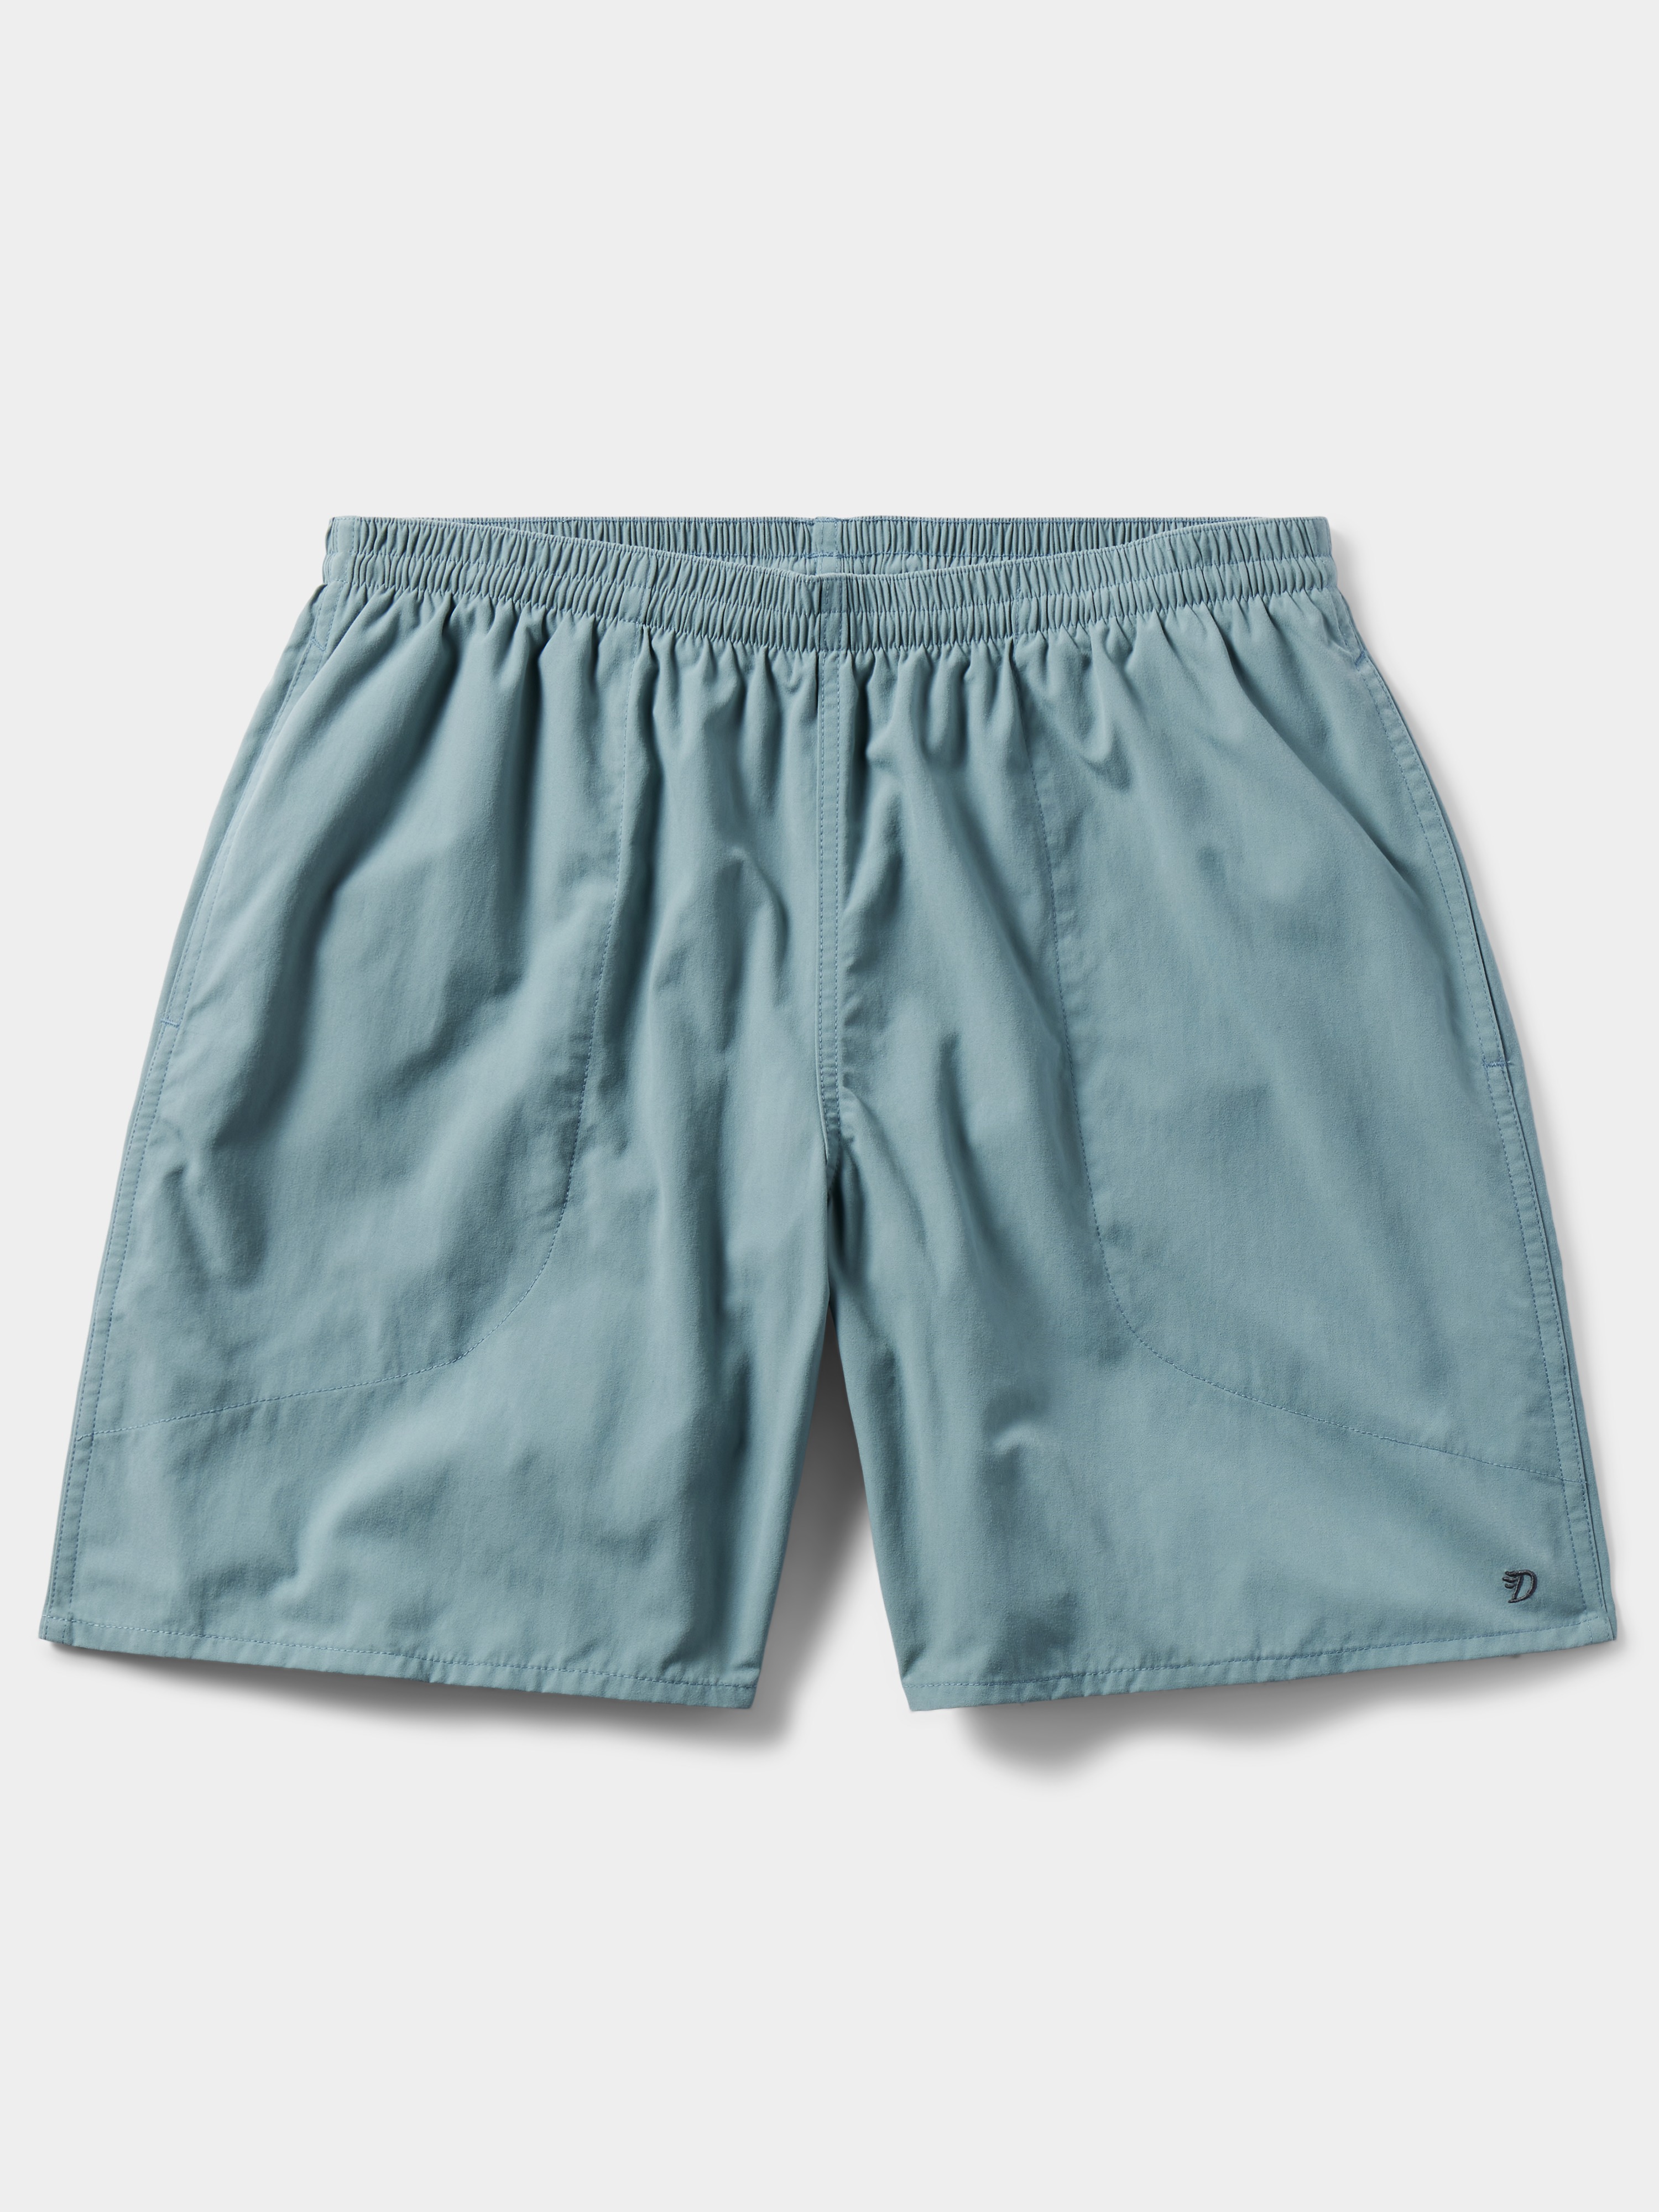 Men's Shorts – Duck Camp